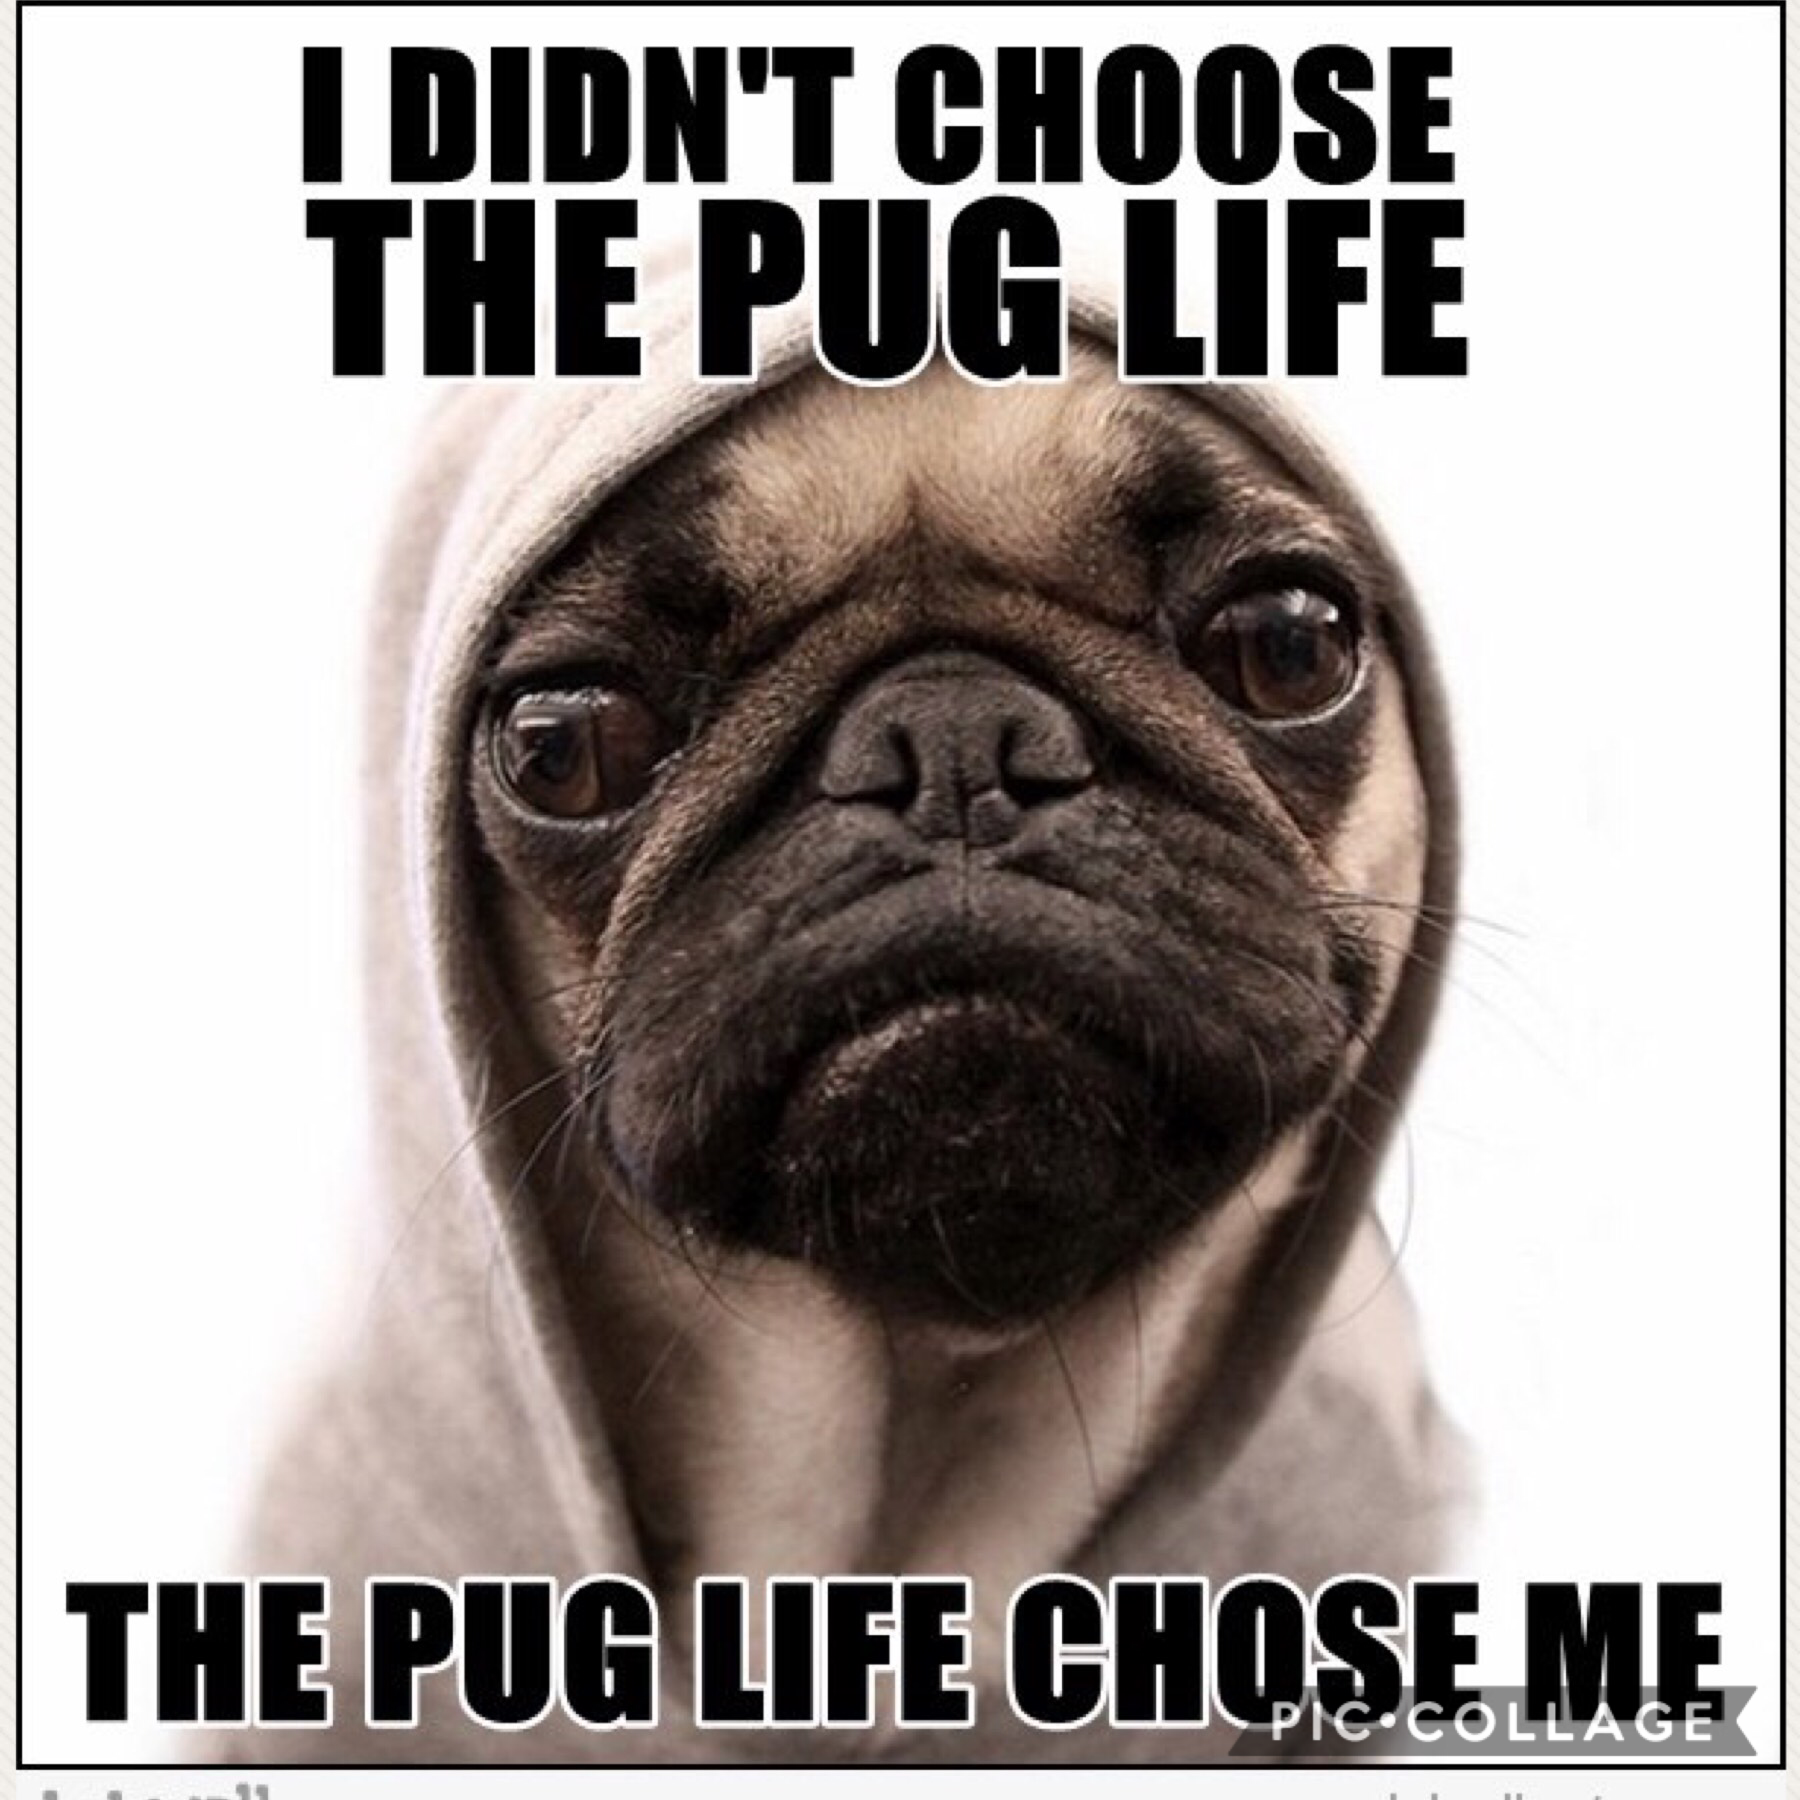 I didn’t chose the pug life the pug life chose me!!